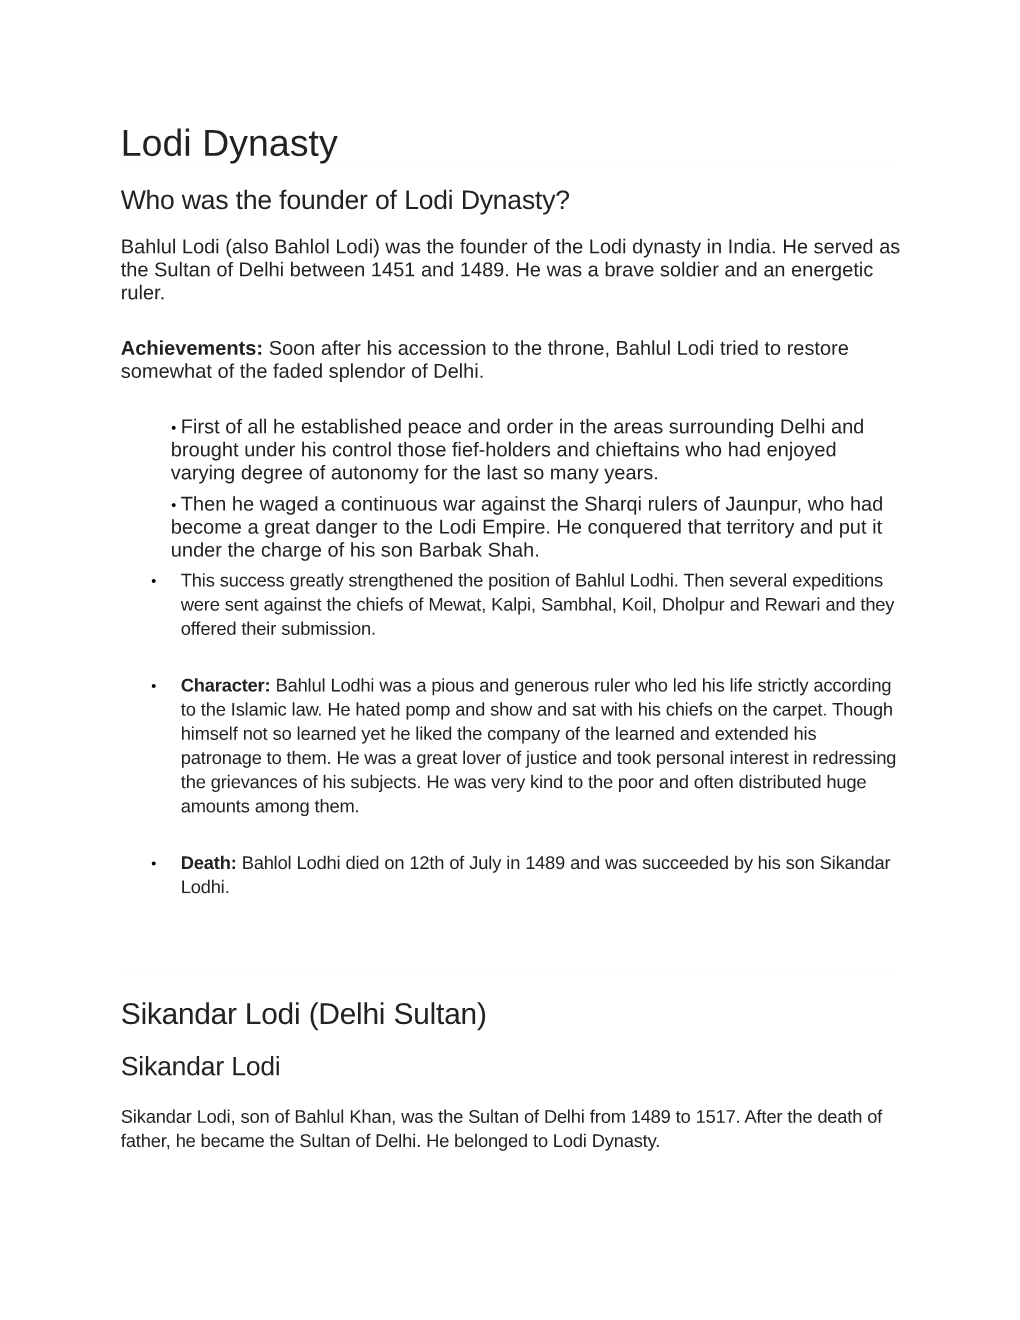 Lodi Dynasty Who Was the Founder of Lodi Dynasty?